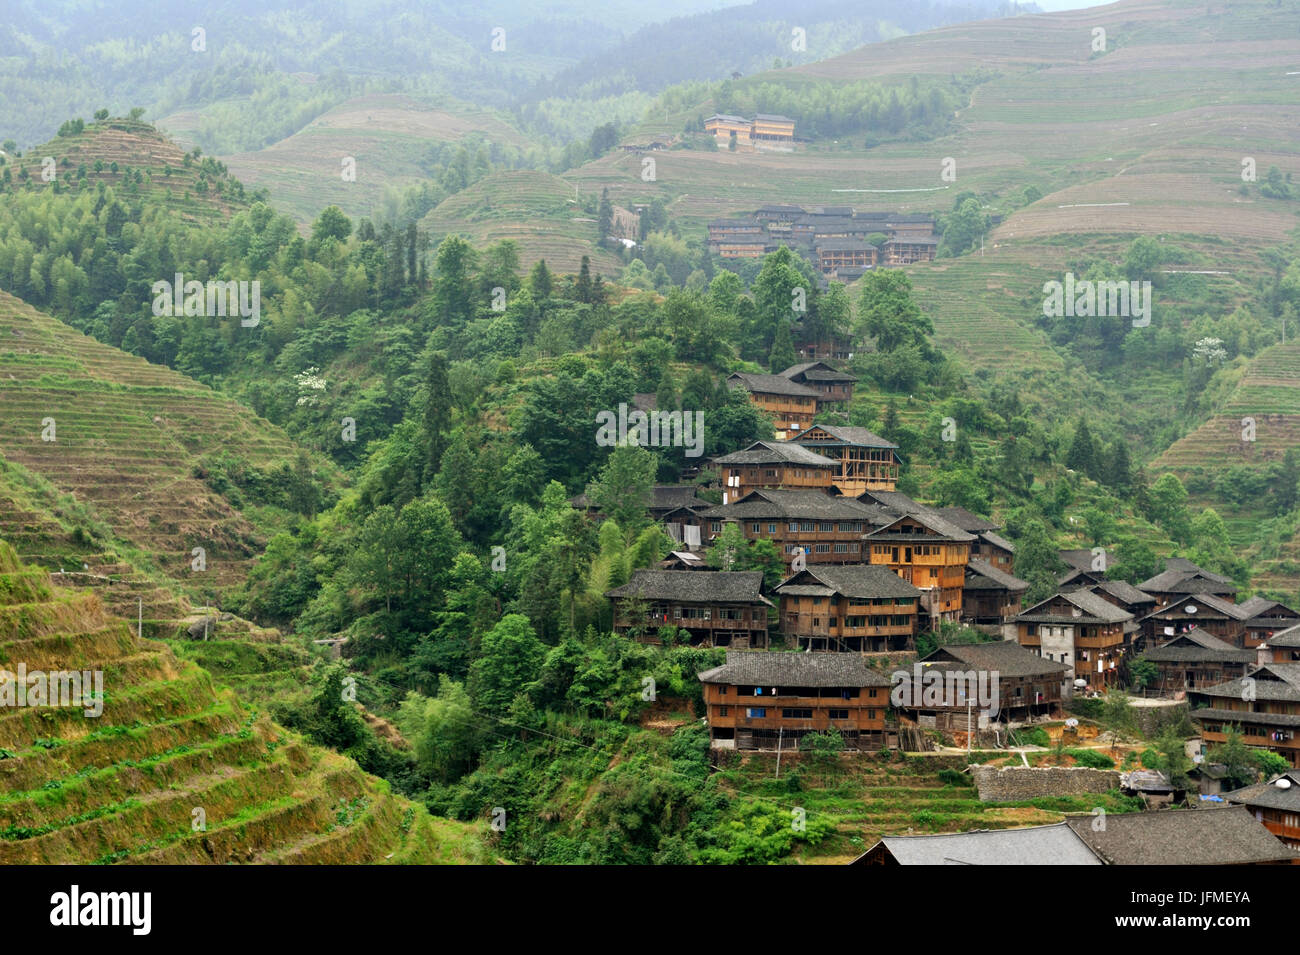 China, Guangxi Province, rice terraces at Longji around Longsheng, Dazhai village Stock Photo